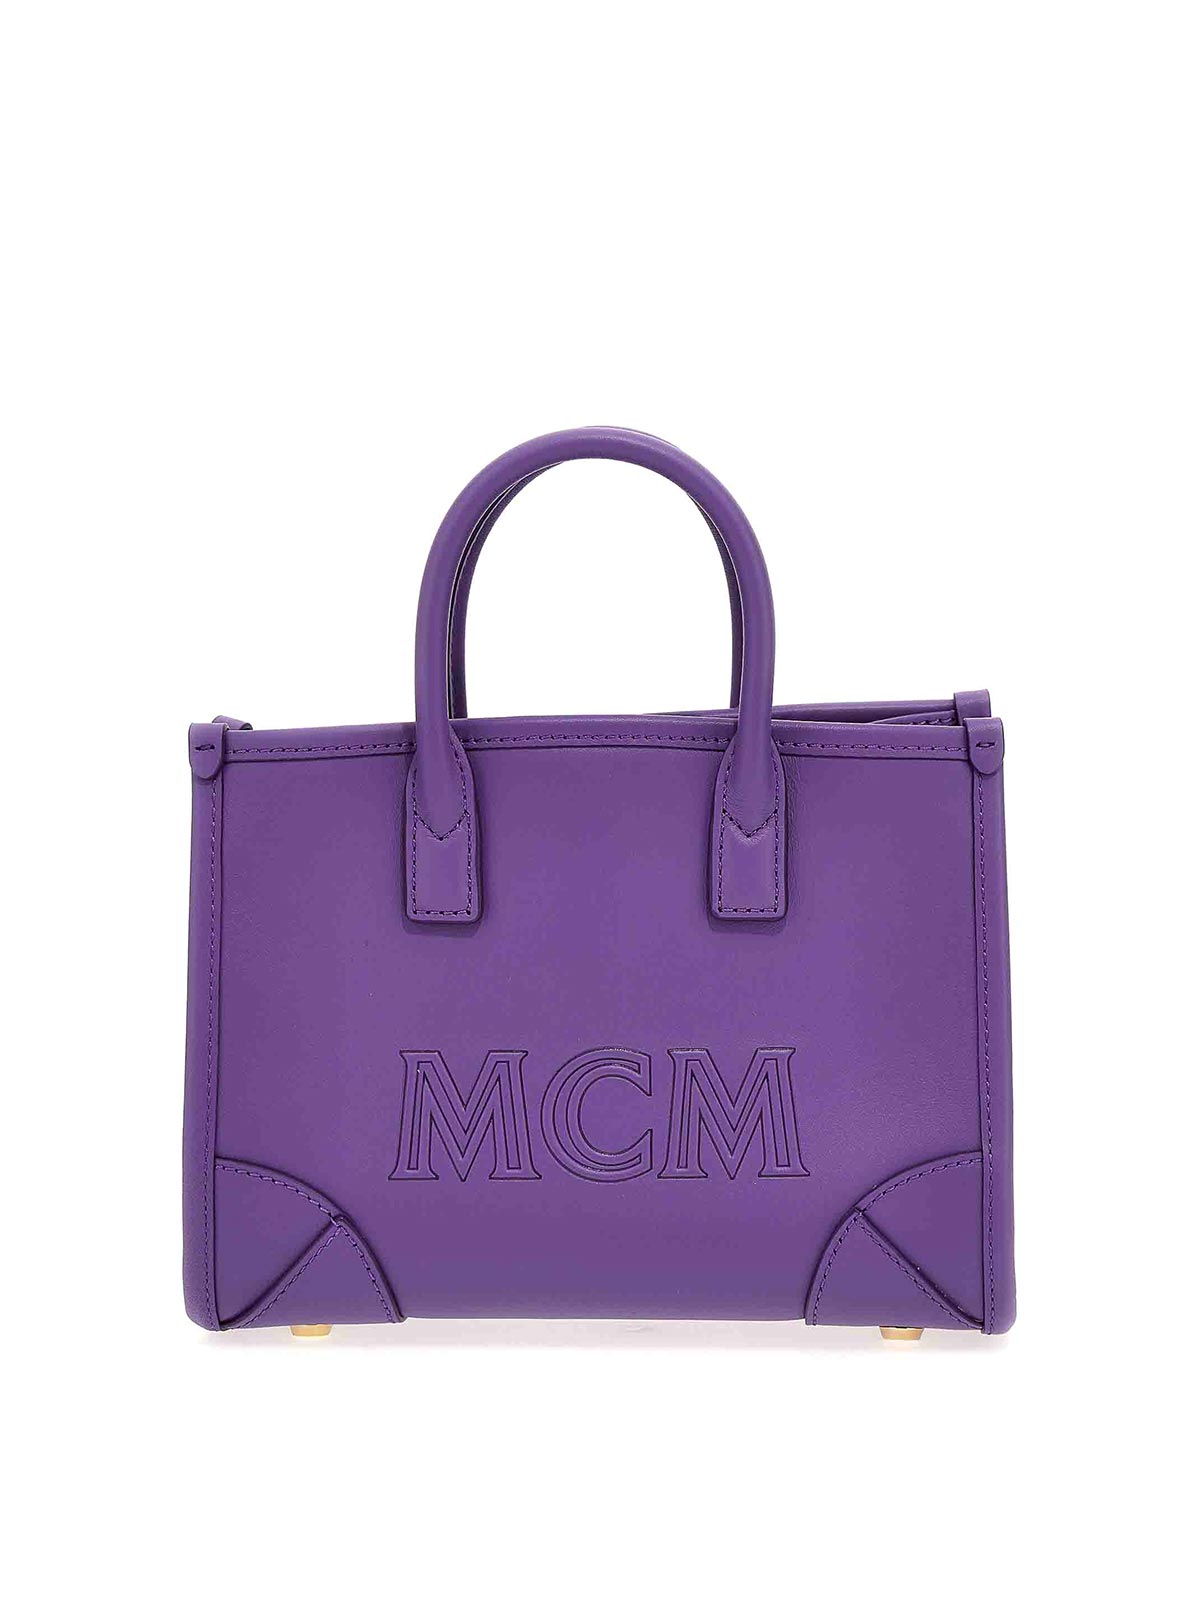 Mcm Munchen Mini Shopping Bag In Purple